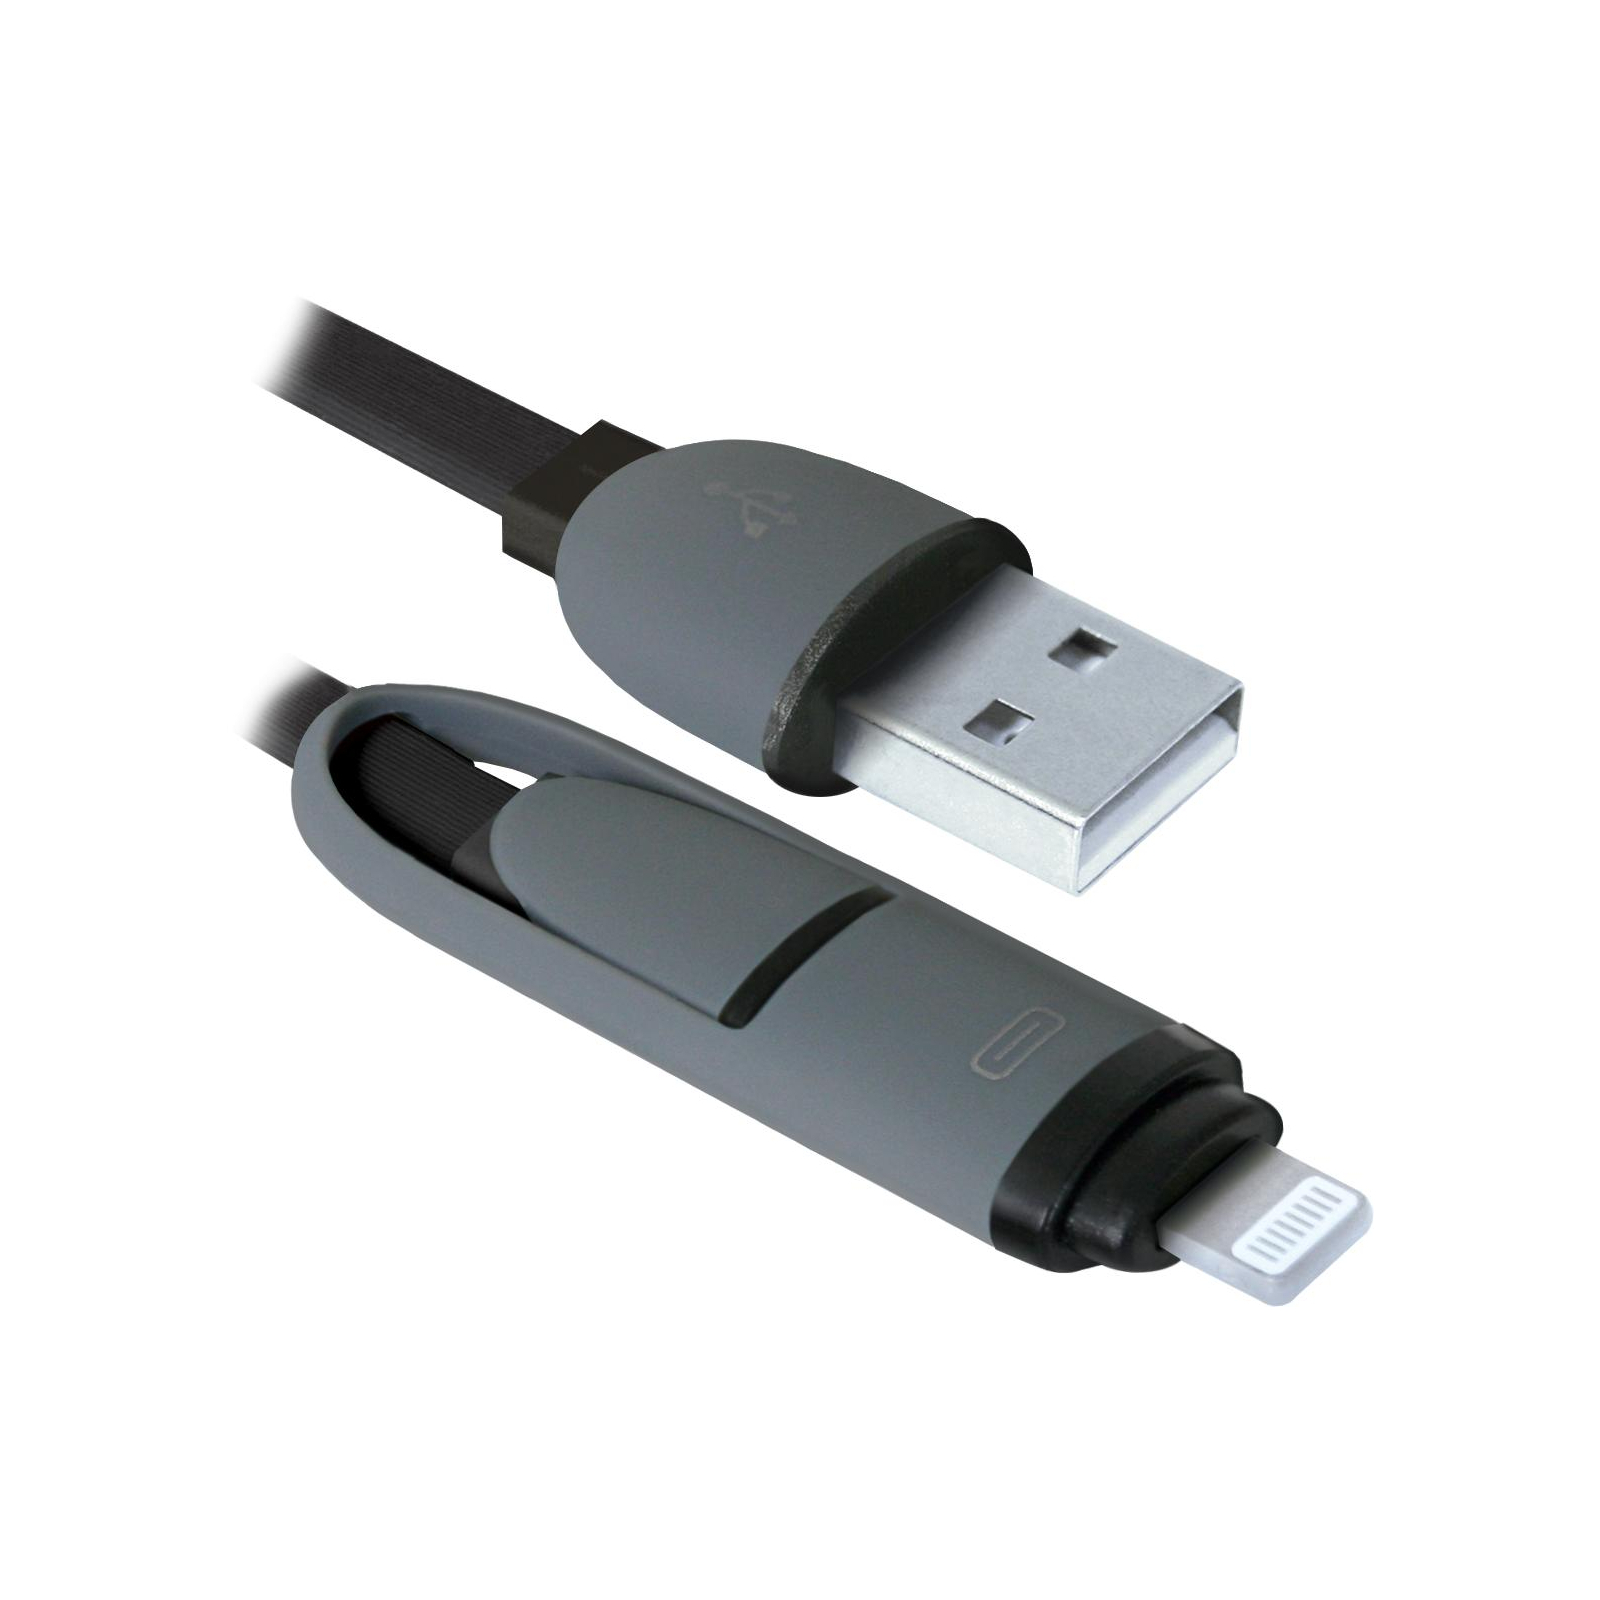 Дата кабель USB10-03BP USB - Micro USB/Lightning, black, 1m Defender (87488)